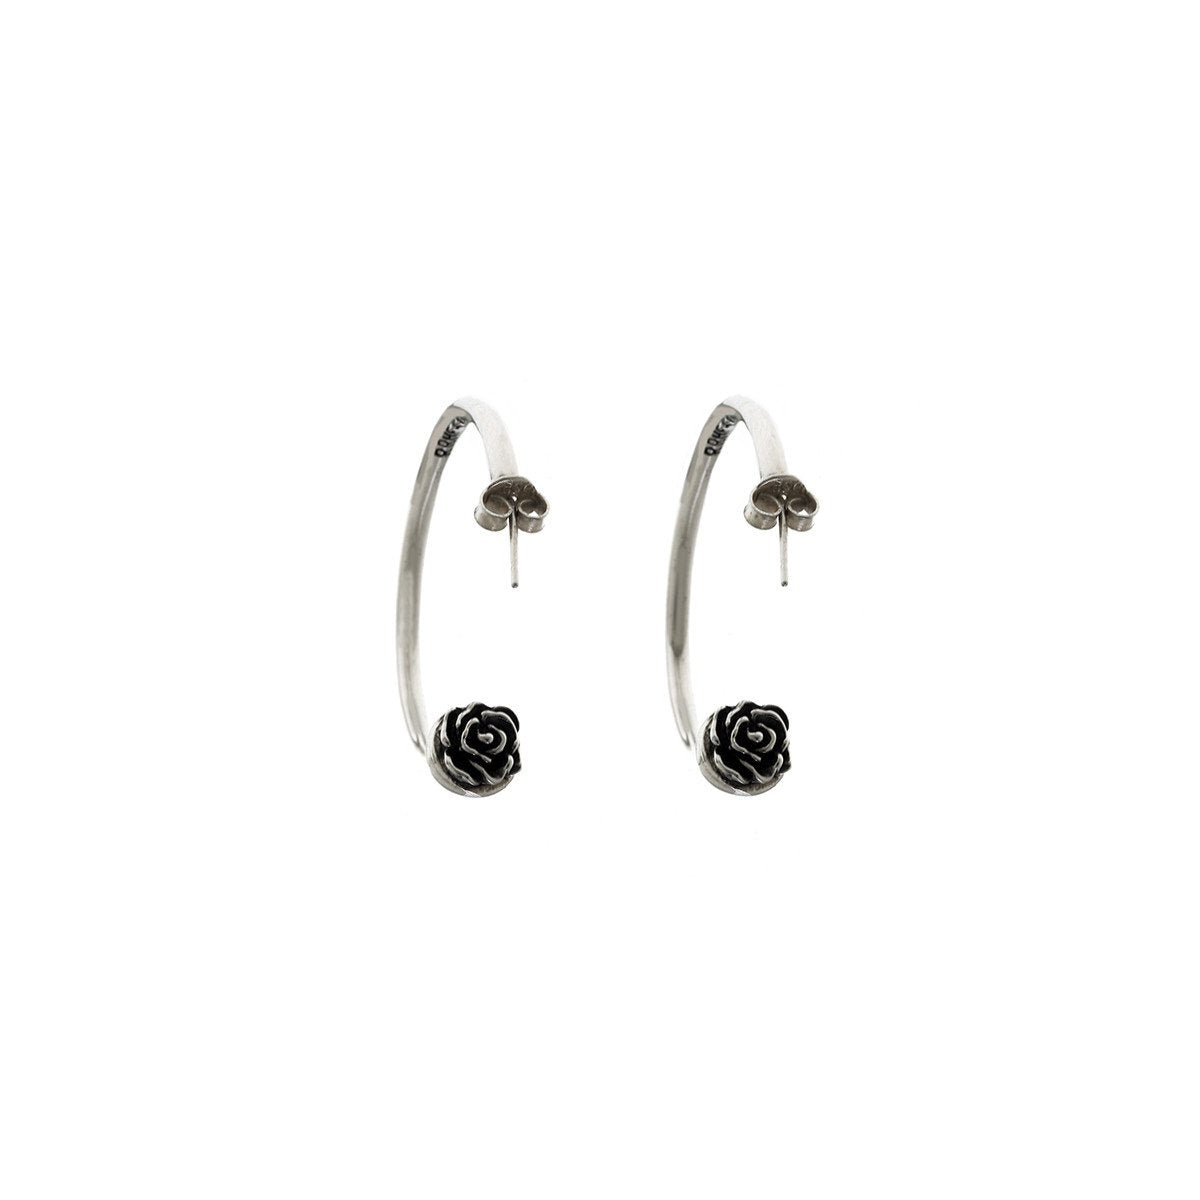 Imagine Peace Single Rose Sterling Silver Hoop Earrings - Cynthia Gale New York Jewelry